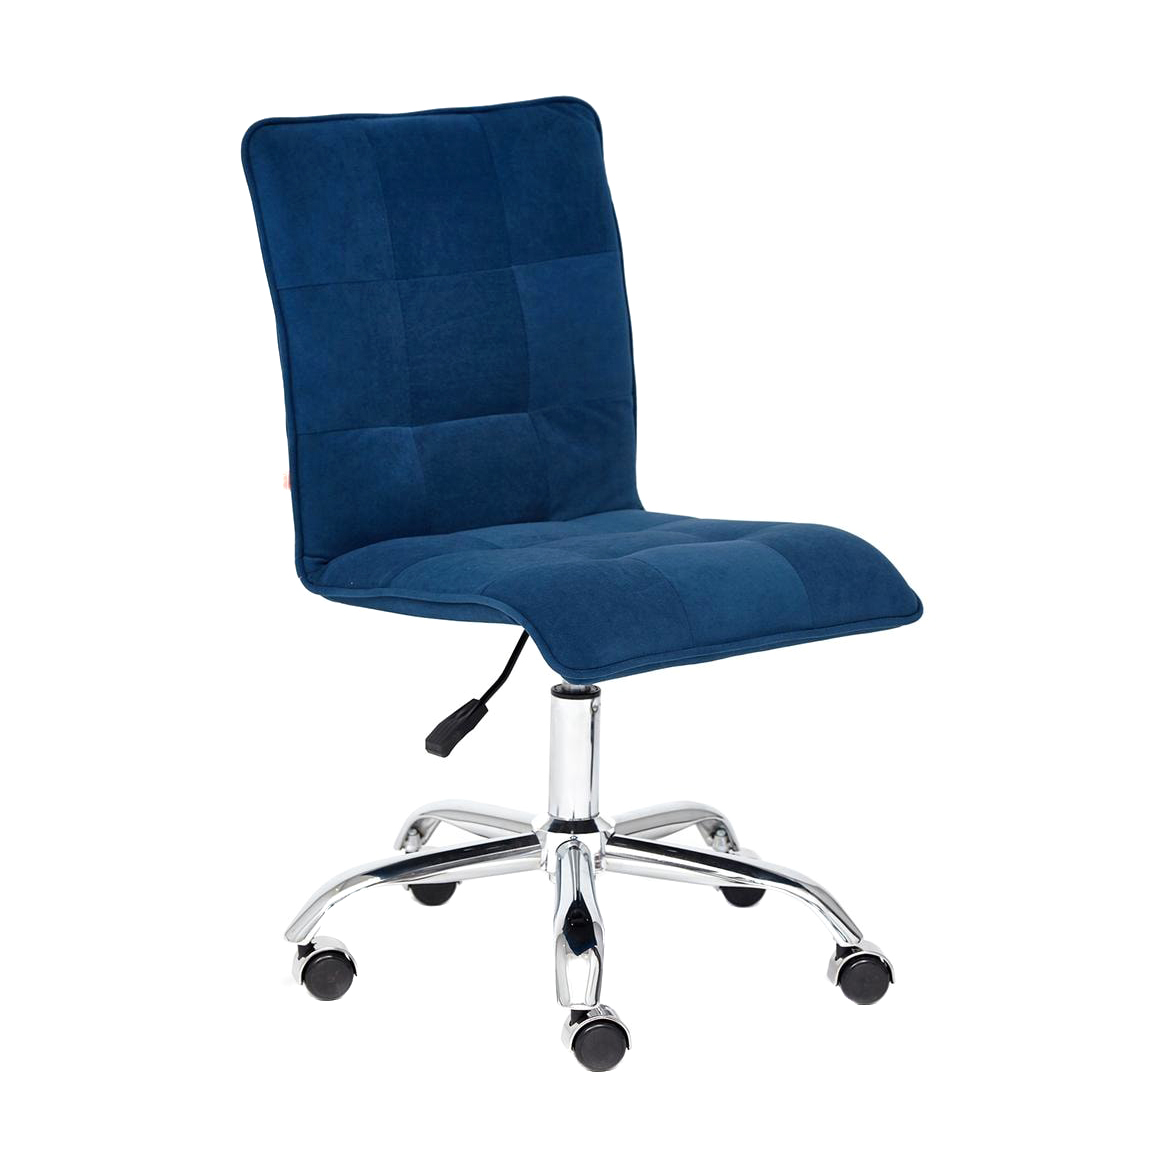 Кресло офисное TC до 100 кг 96х45х40 см синий кресло офисное tc до 100 кг 96х45х40 см оливковый